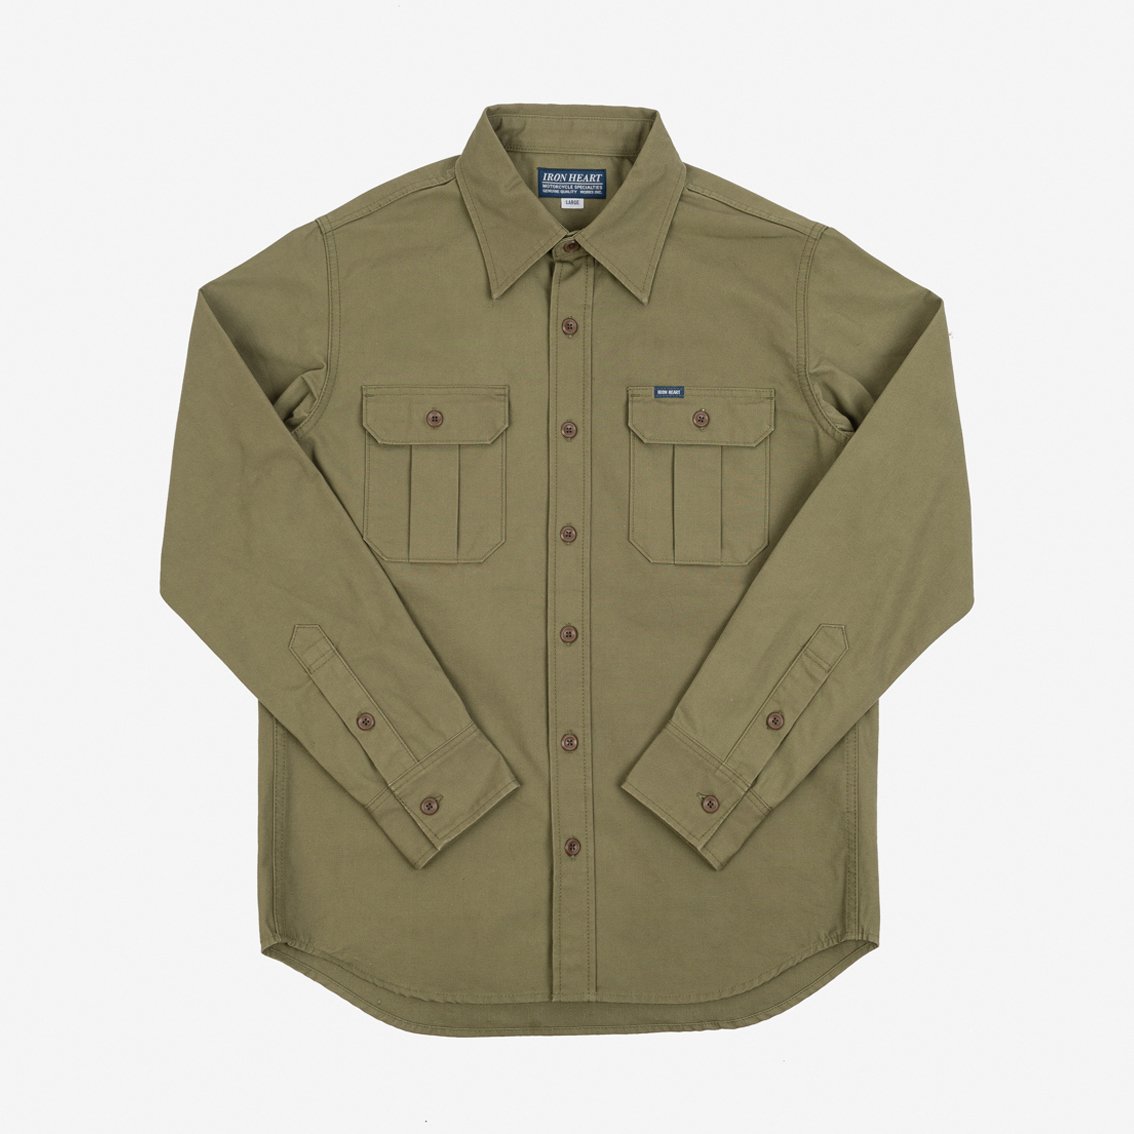 IHSH-354-ODG 9oz Military Shirt Olive Drab Green